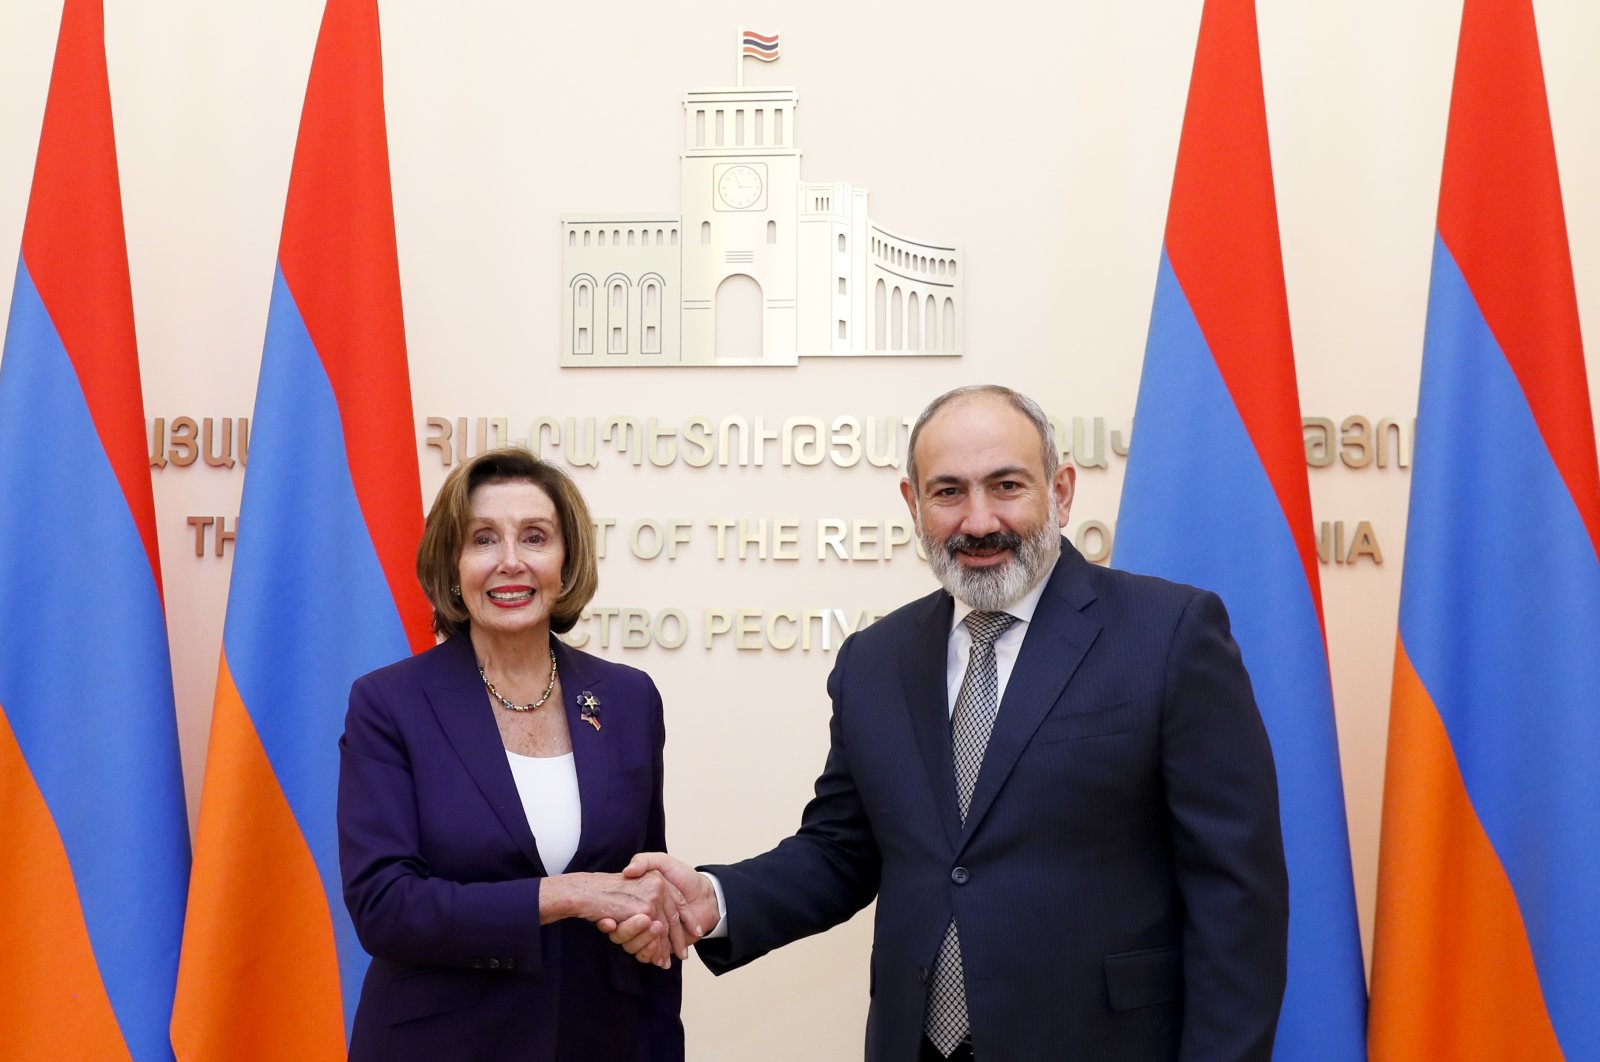 Kunjungan Pelosi ke sekutu setia Rusia, Armenia: Perjalanan yang berisiko